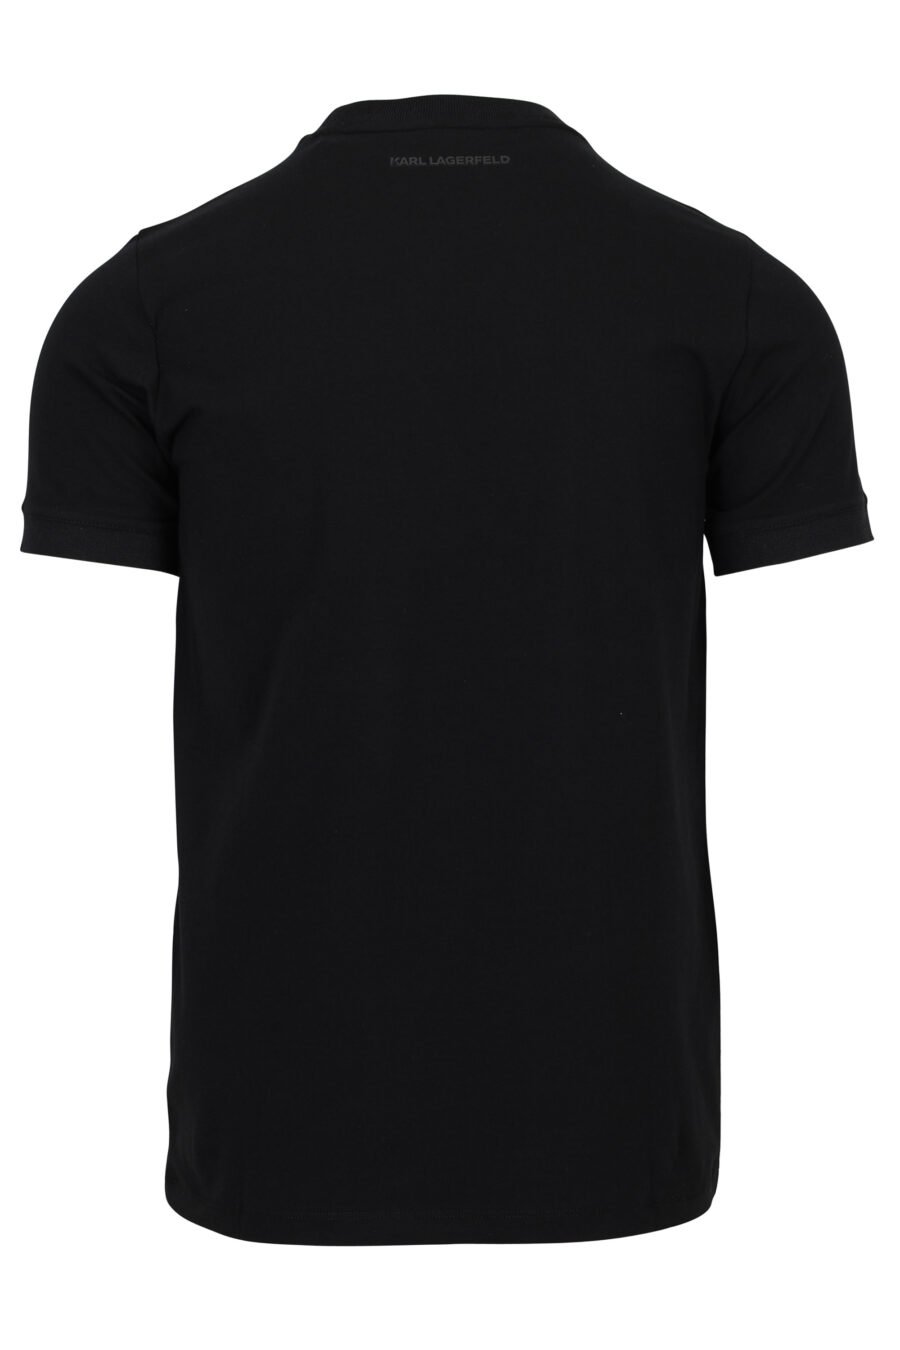 Camiseta negra con minilogo blanco lateral - 4062226952828 1